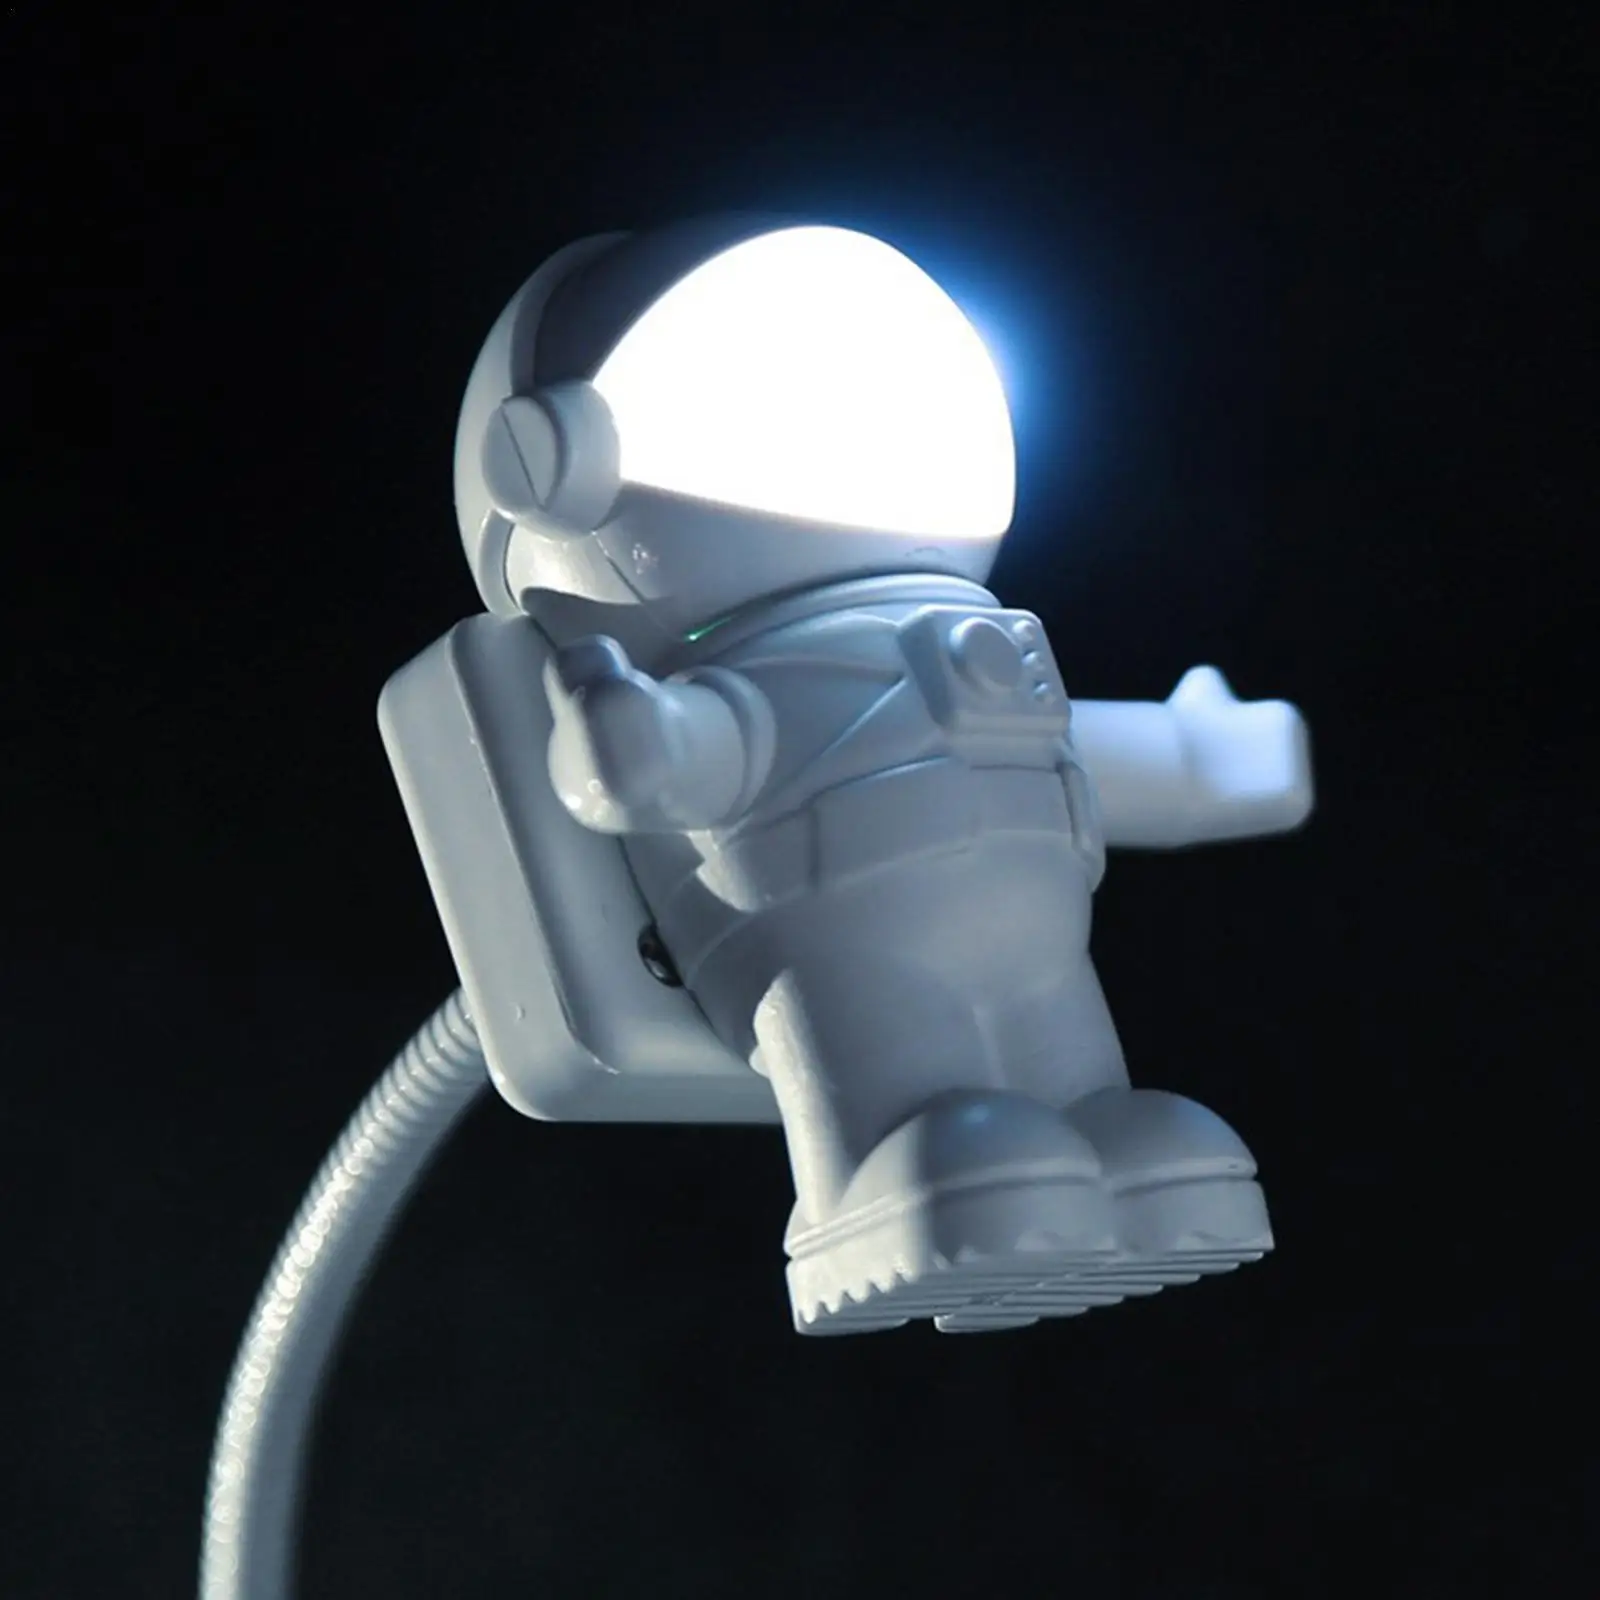 

New Funny Astronaut USB Gadget Spaceman USB LED Light Adjustable Night Light Gadgets For Computer PC Lamp Room Decor Nightlights